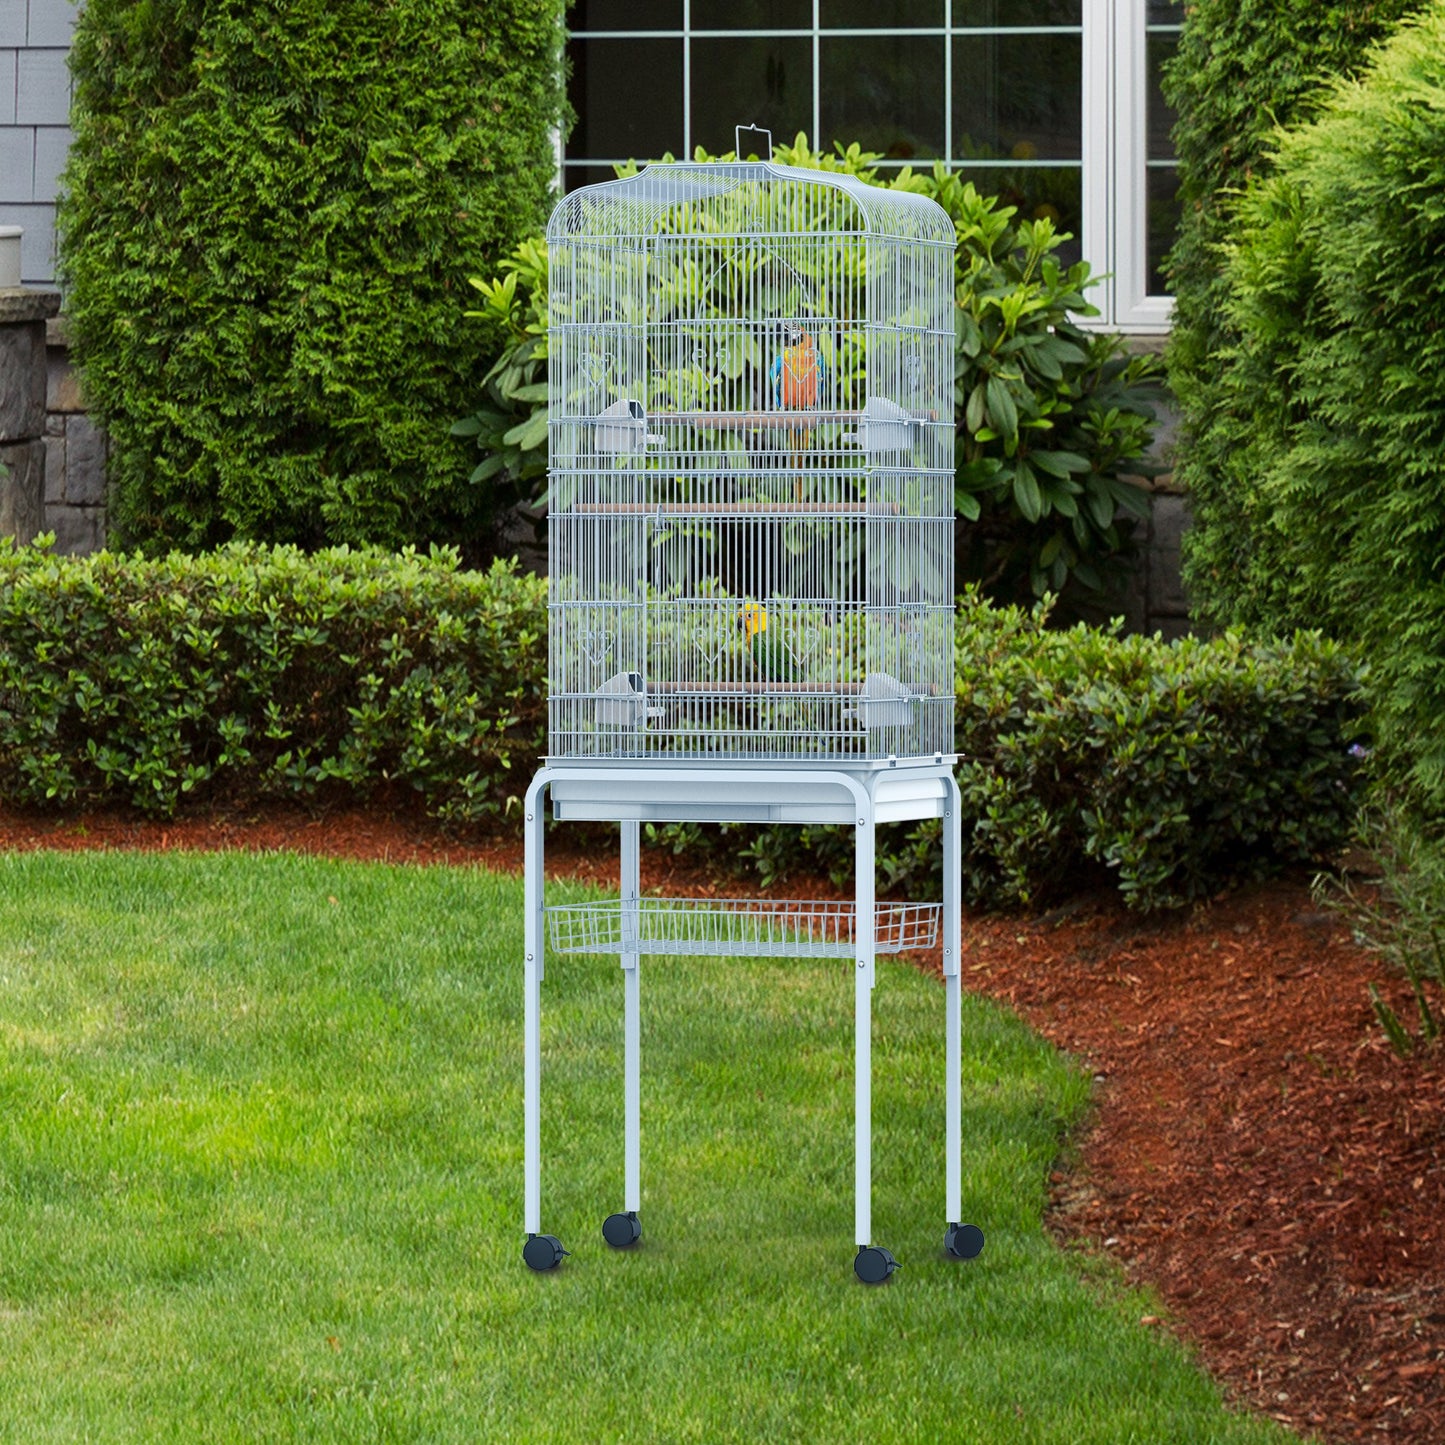 PawHut 153cm Metal Bird Cage W/Removable Breeding Stand Feeding Tray Wheels Stand-Light blue